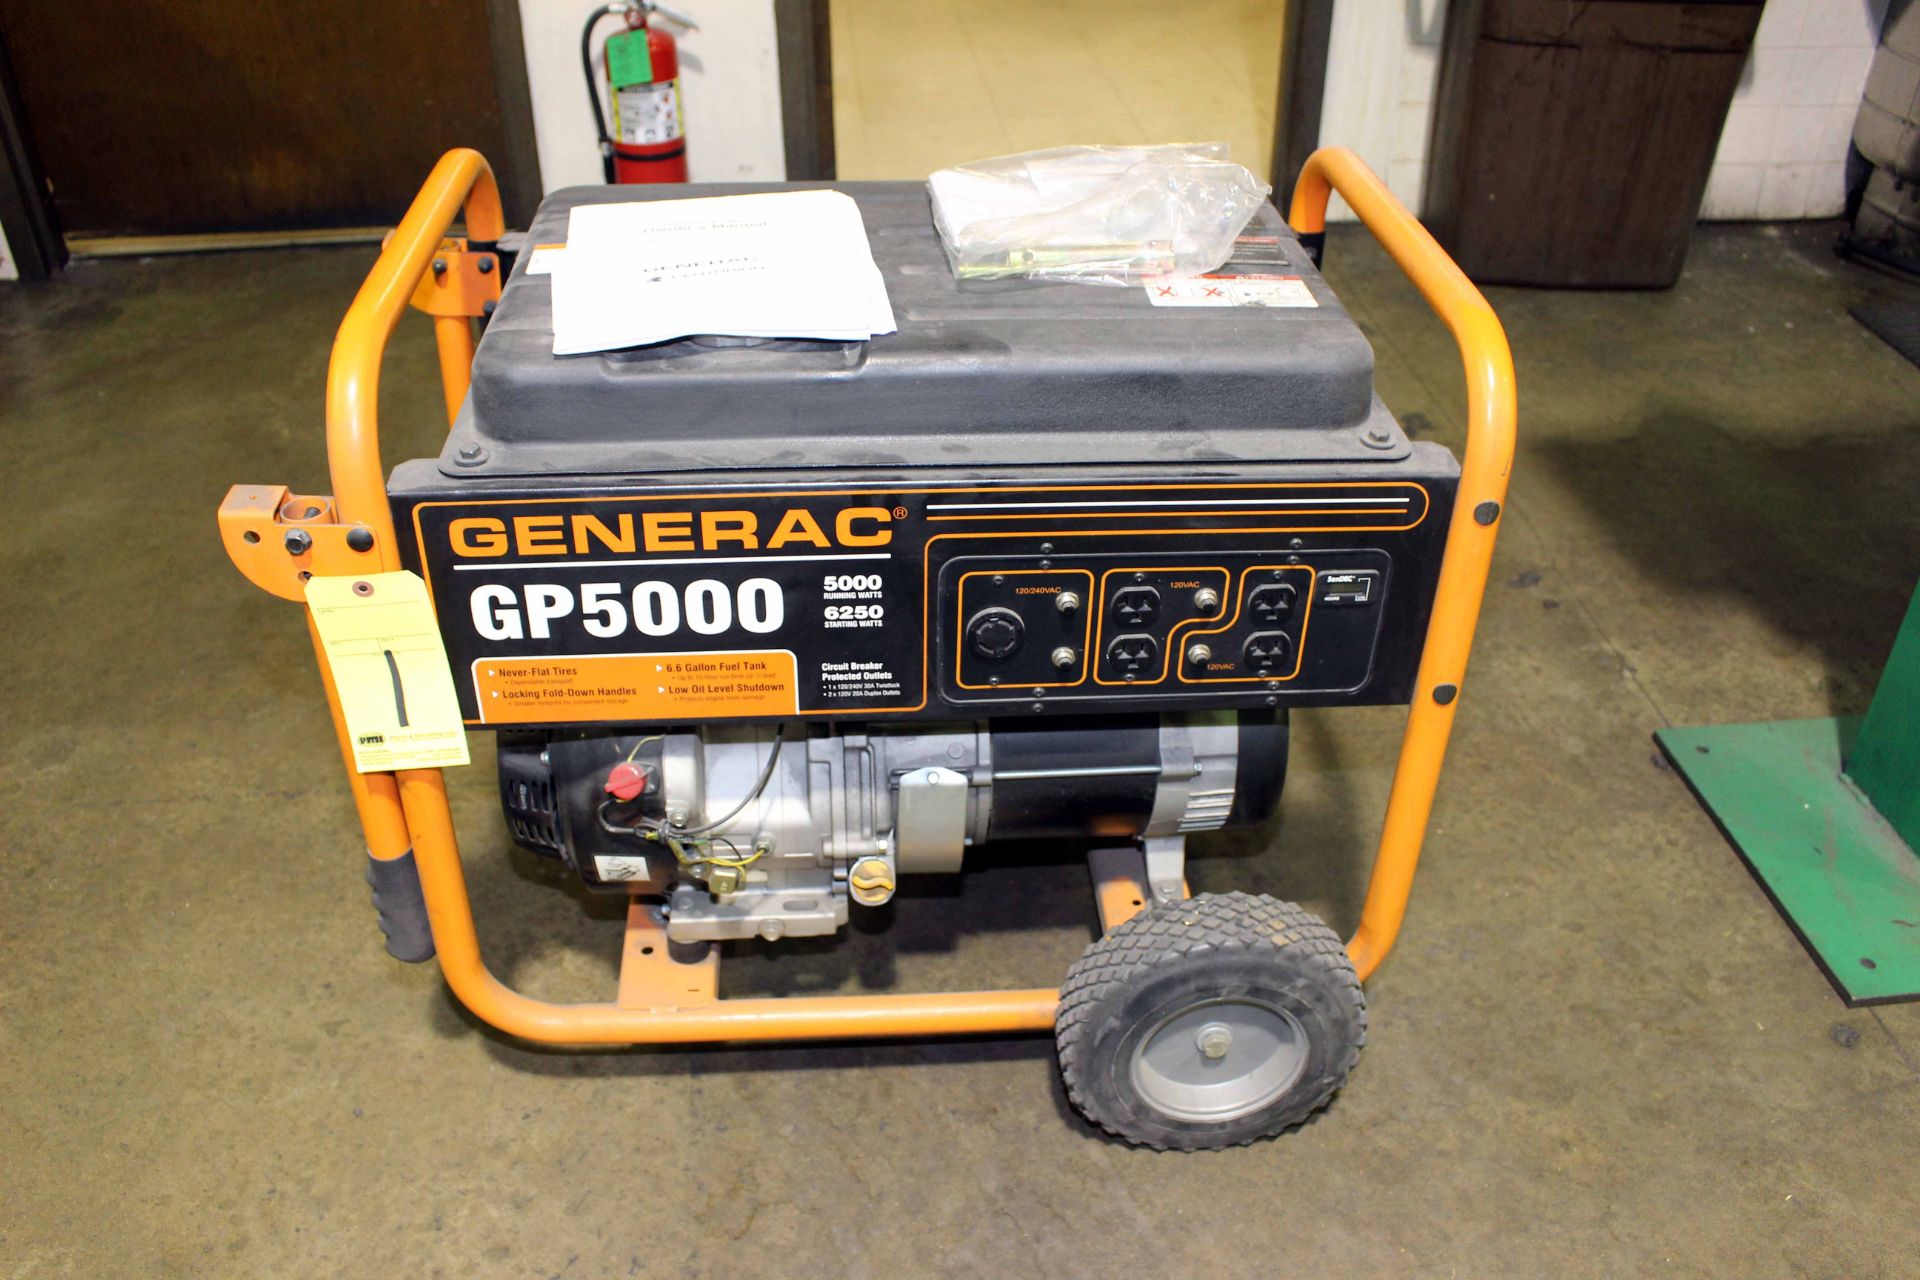 PORTABLE GENERATOR, GENERAC MDL. GP5000, 5,000 watts, 6,250 starting watts, gasoline engine, on